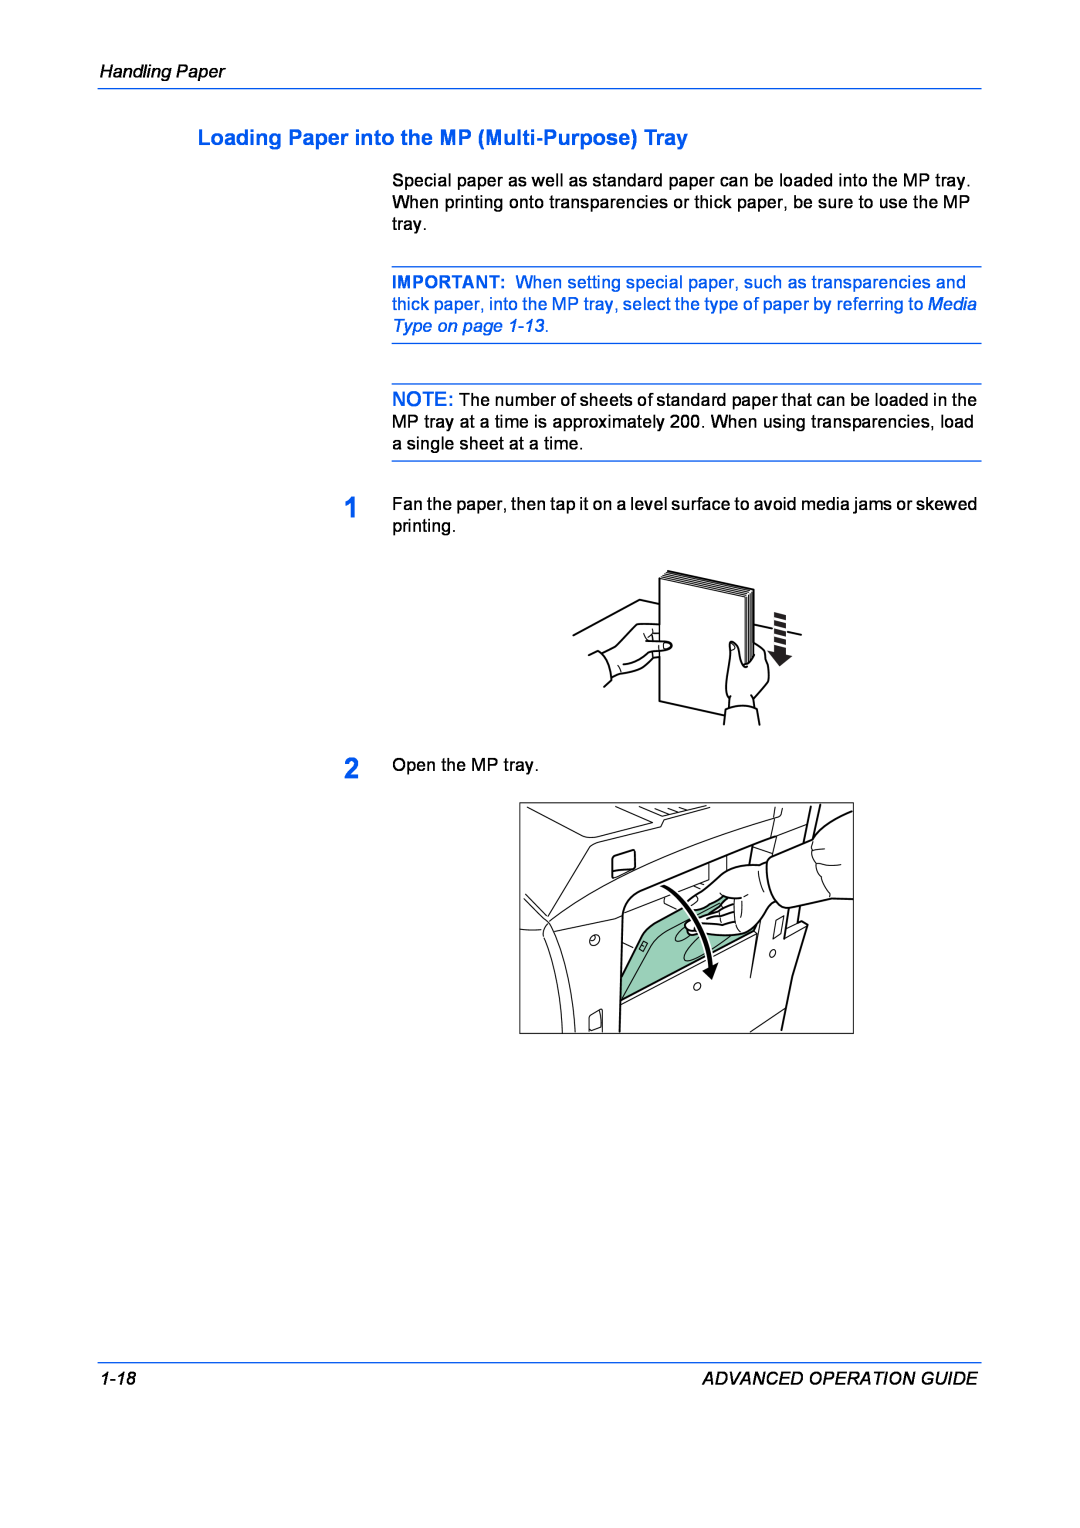 Kyocera 9530DN manual Loading Paper into the MP Multi-Purpose Tray 